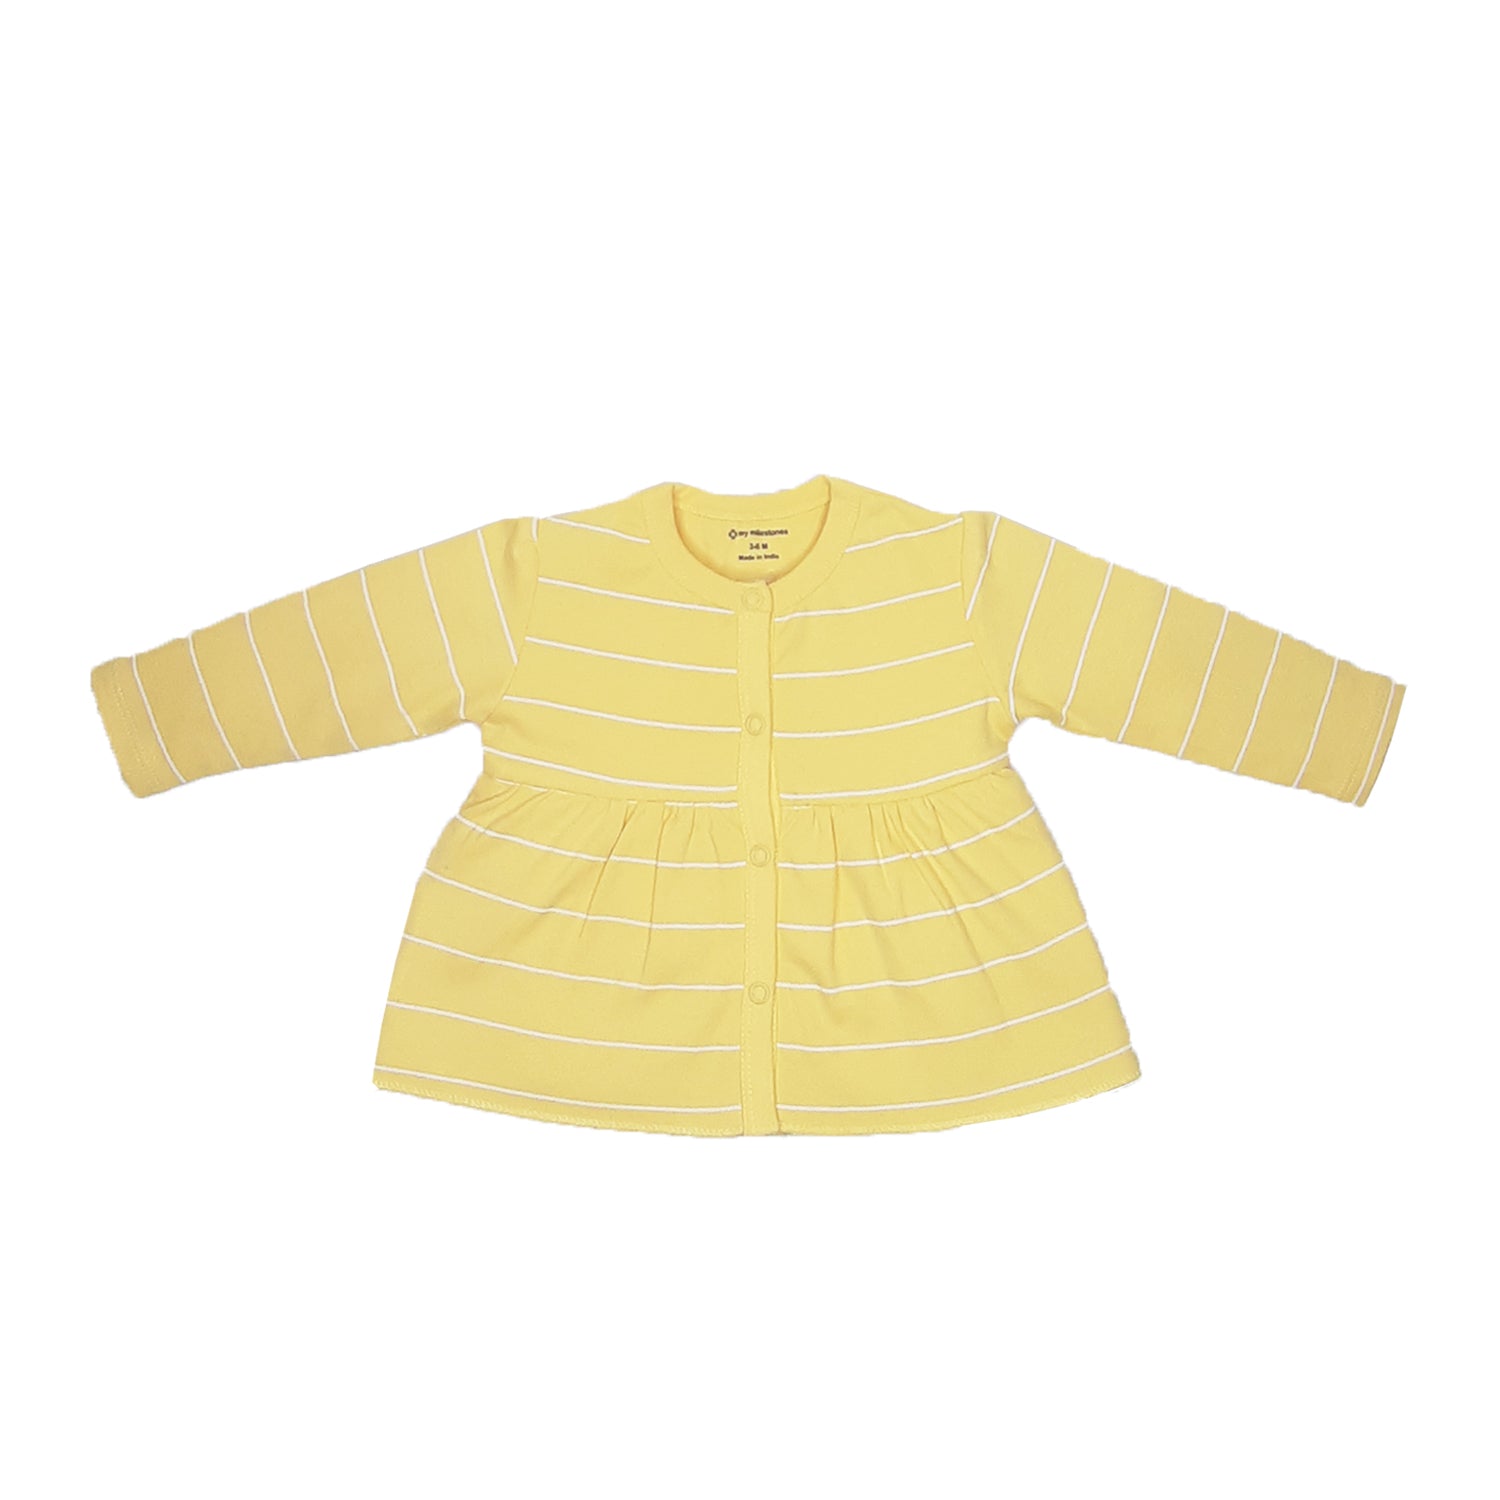 My Milestones T-shirt Full Sleeves Girls Yellow Striped / Aqua Striped - 2 Pc Pack